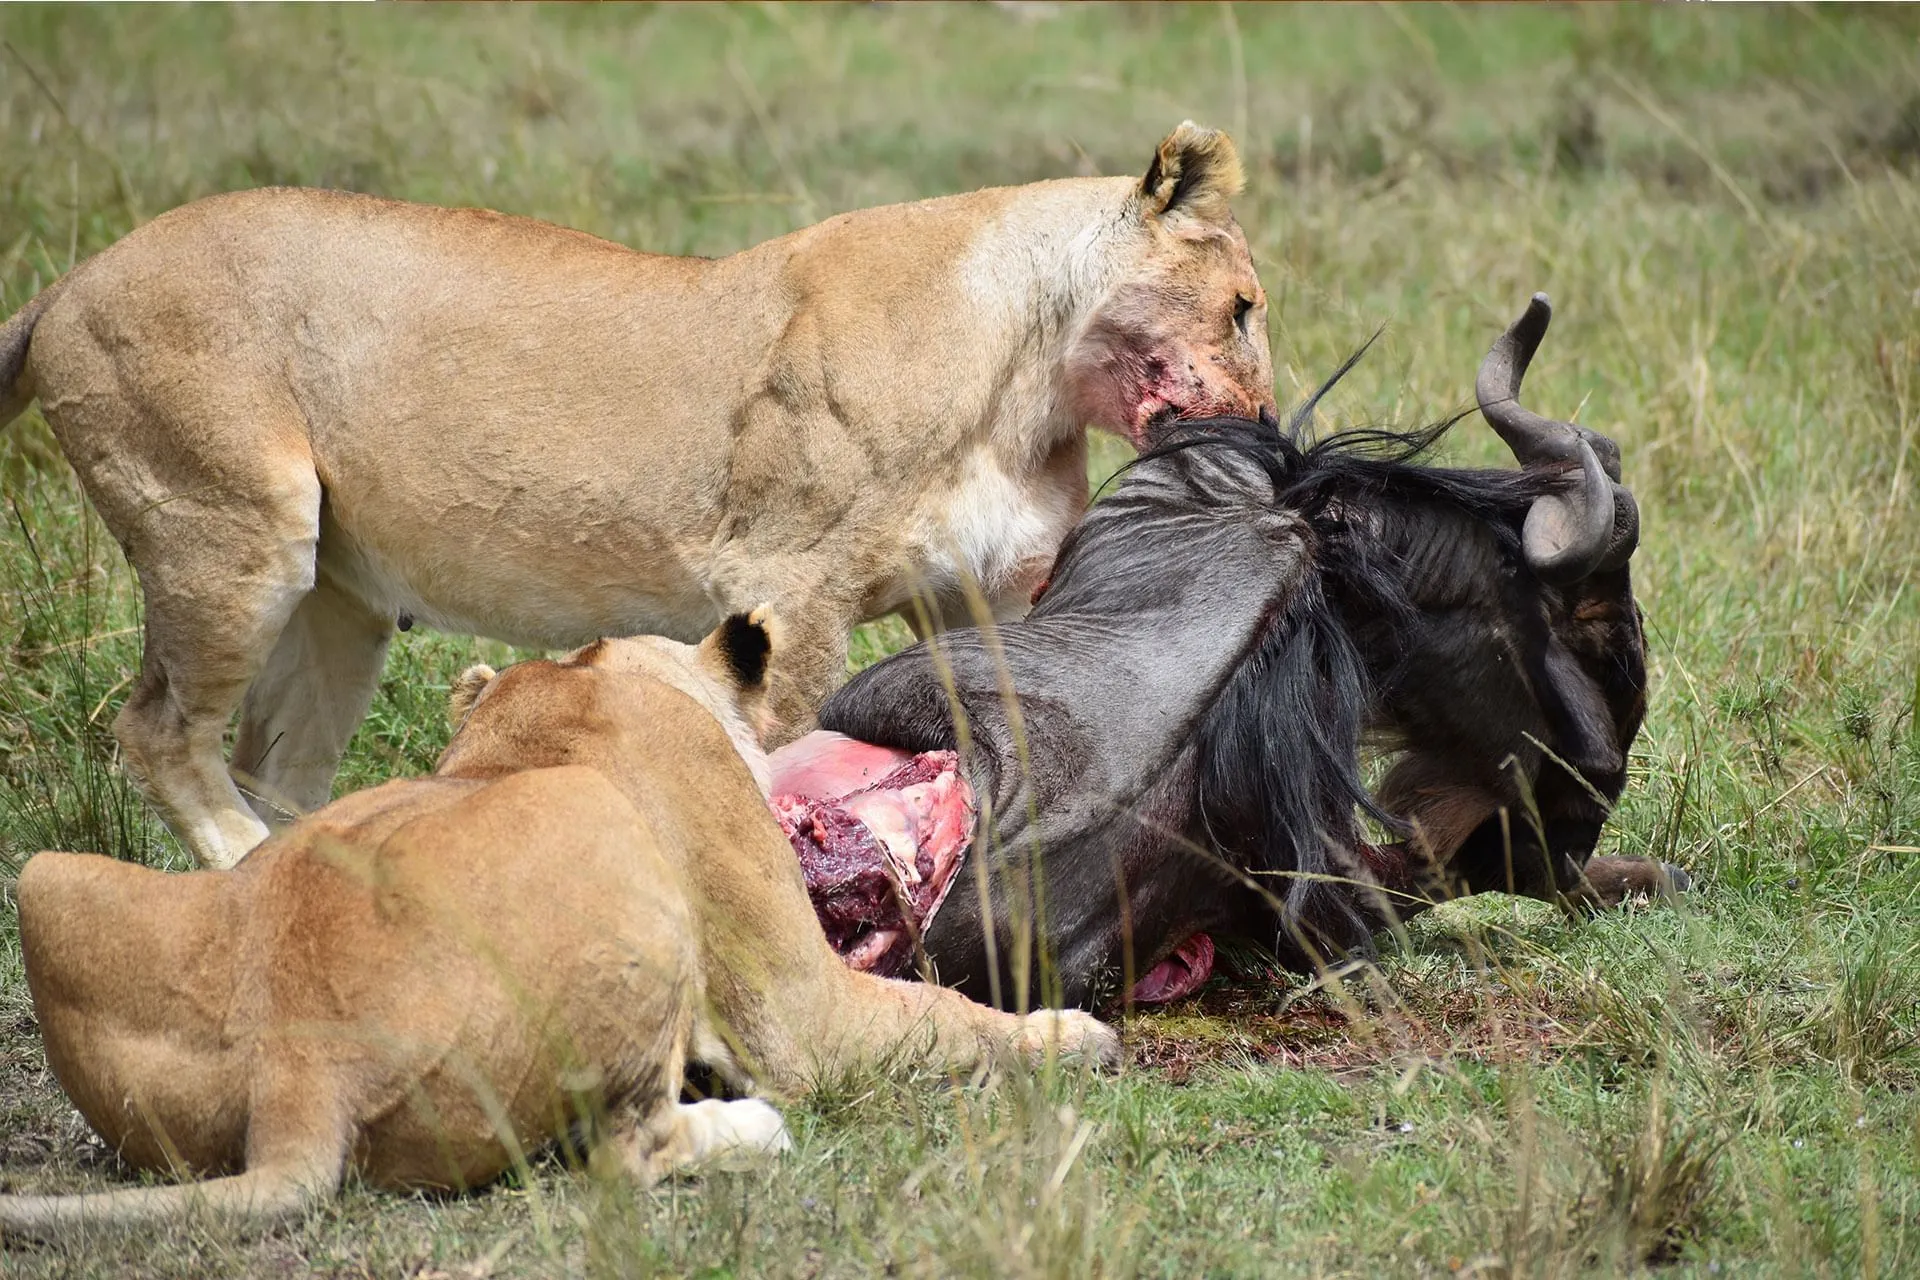 Kenya package Holidays - Lions feeding in Masai Mara national reserve.